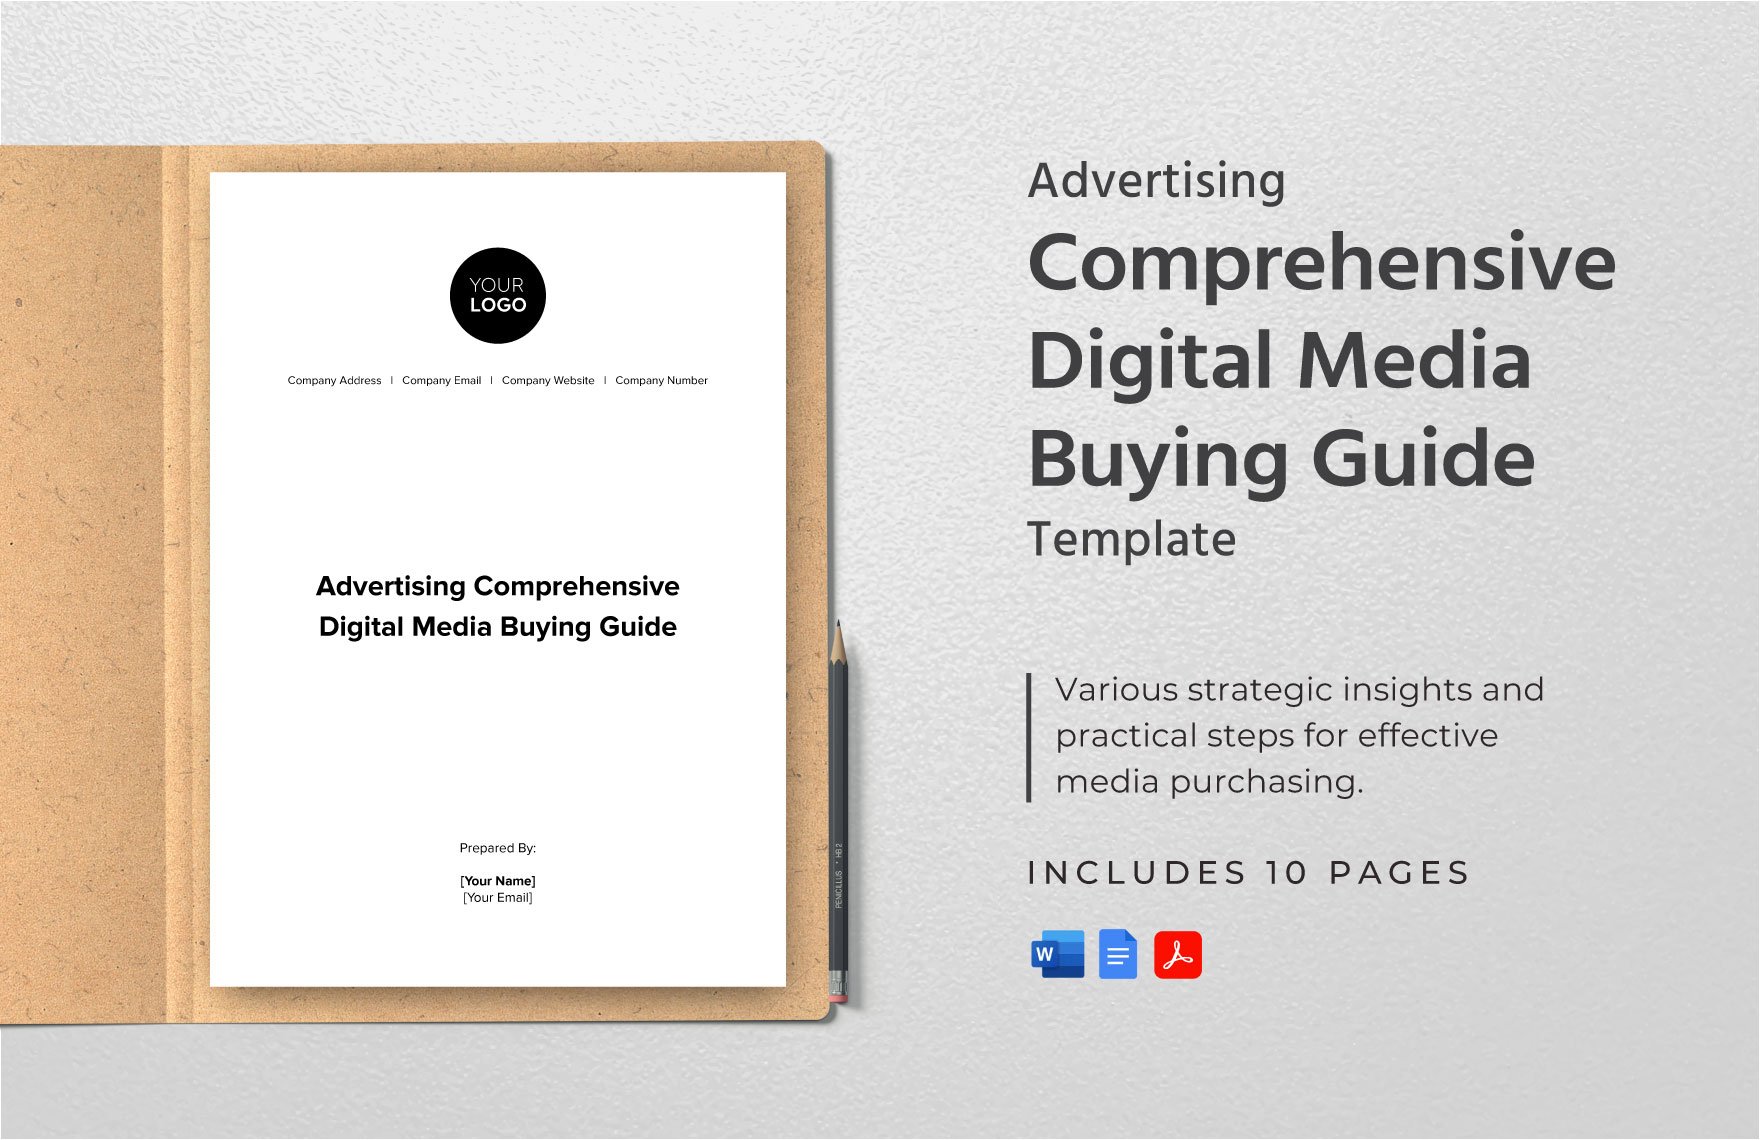 Advertising Comprehensive Digital Media Buying Guide Template